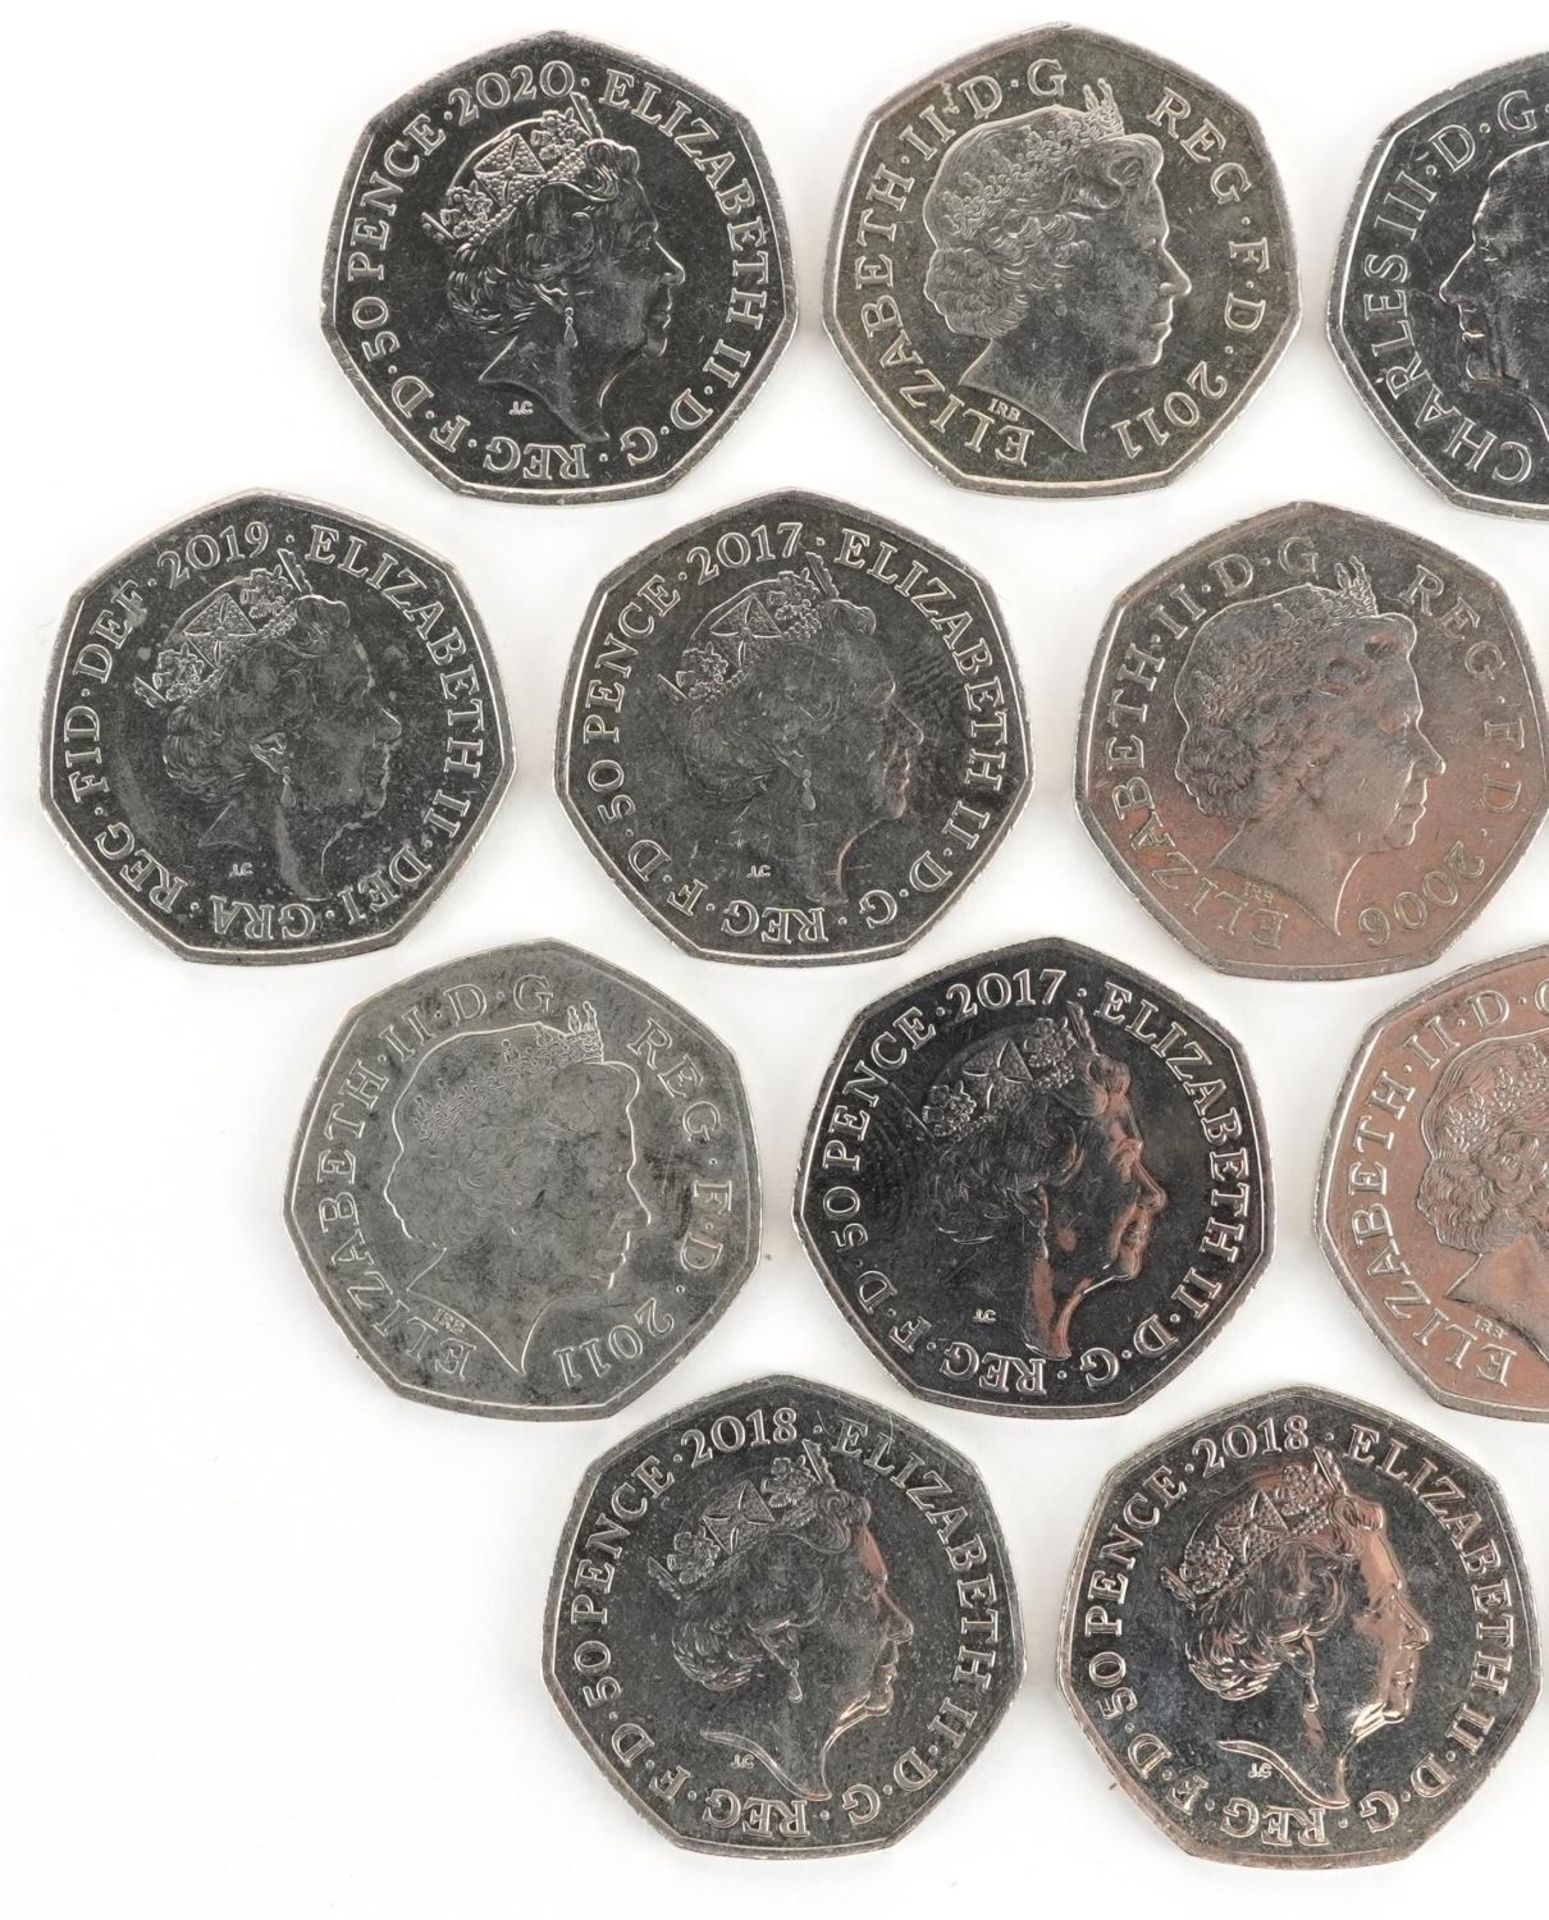 Twenty Elizabeth II fifty pence pieces, various designs including London 2012 Olympics and - Bild 5 aus 6